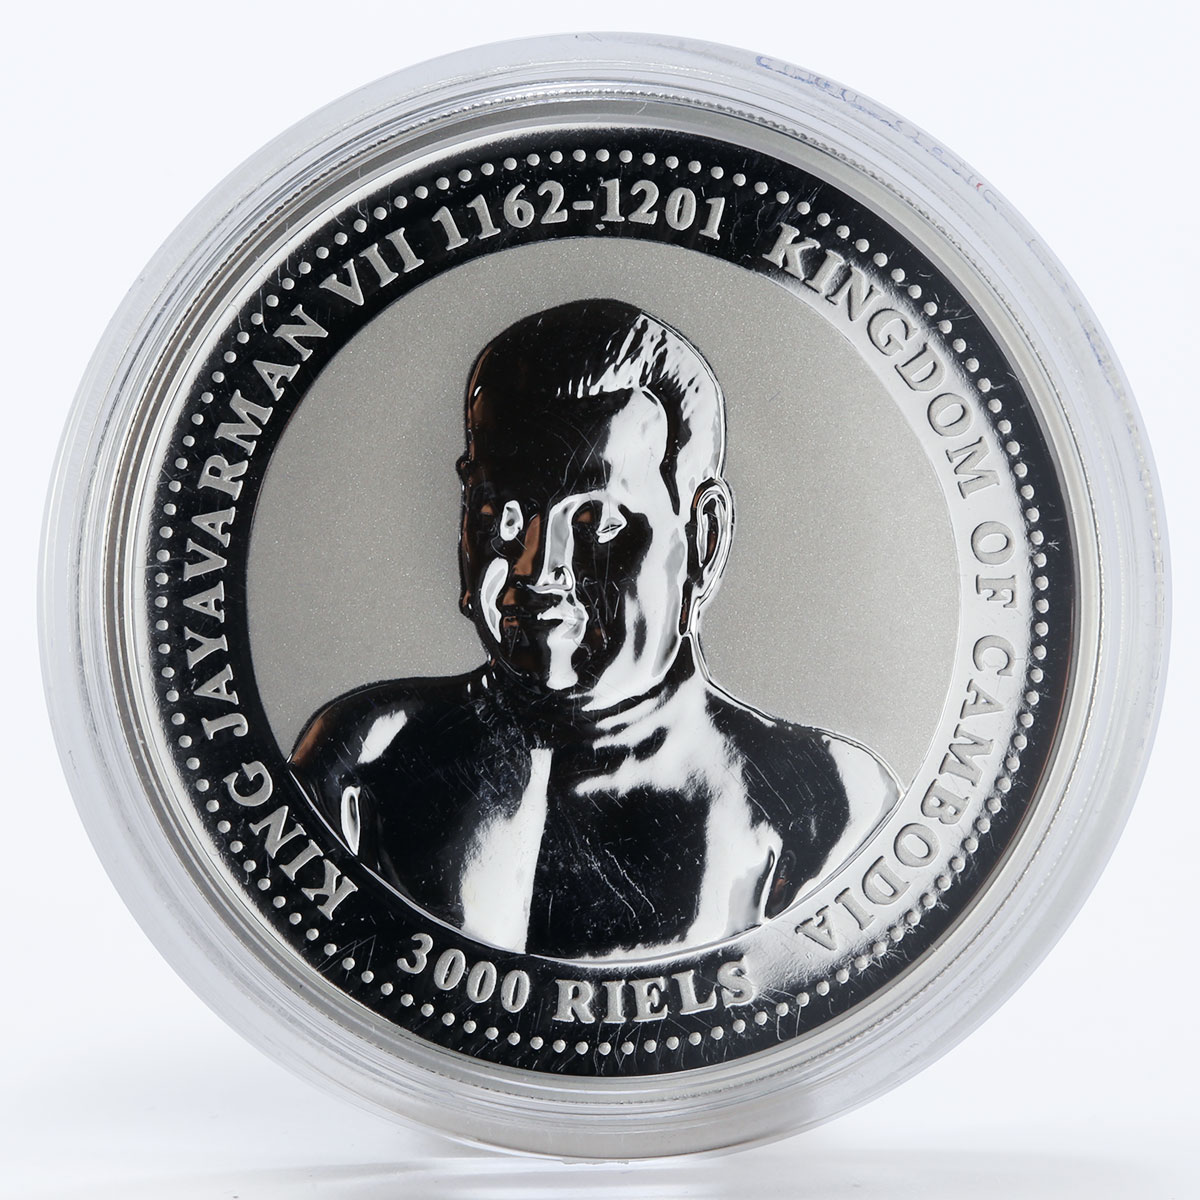 Cambodia 3000 riels Russian Spaniel Year of the Dog Lunar silver 1oz coin 2006